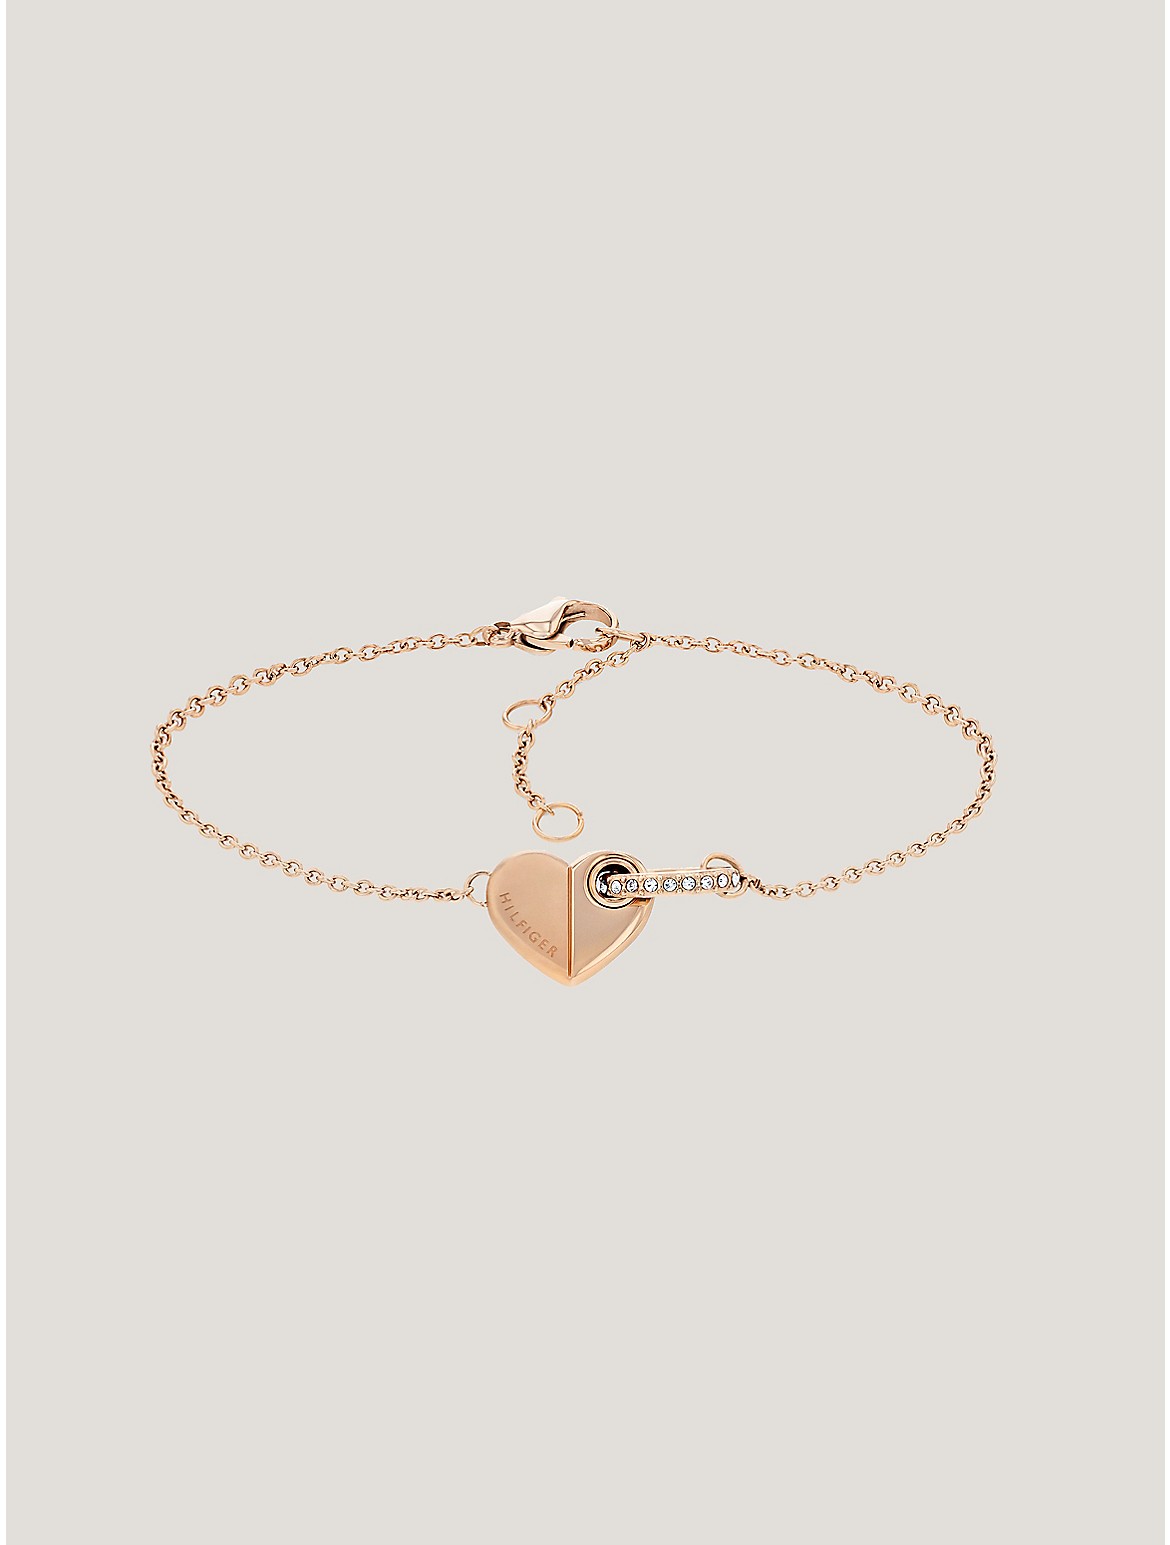 Tommy Hilfiger Women's Carnation Gold-Plated Heart Bracelet